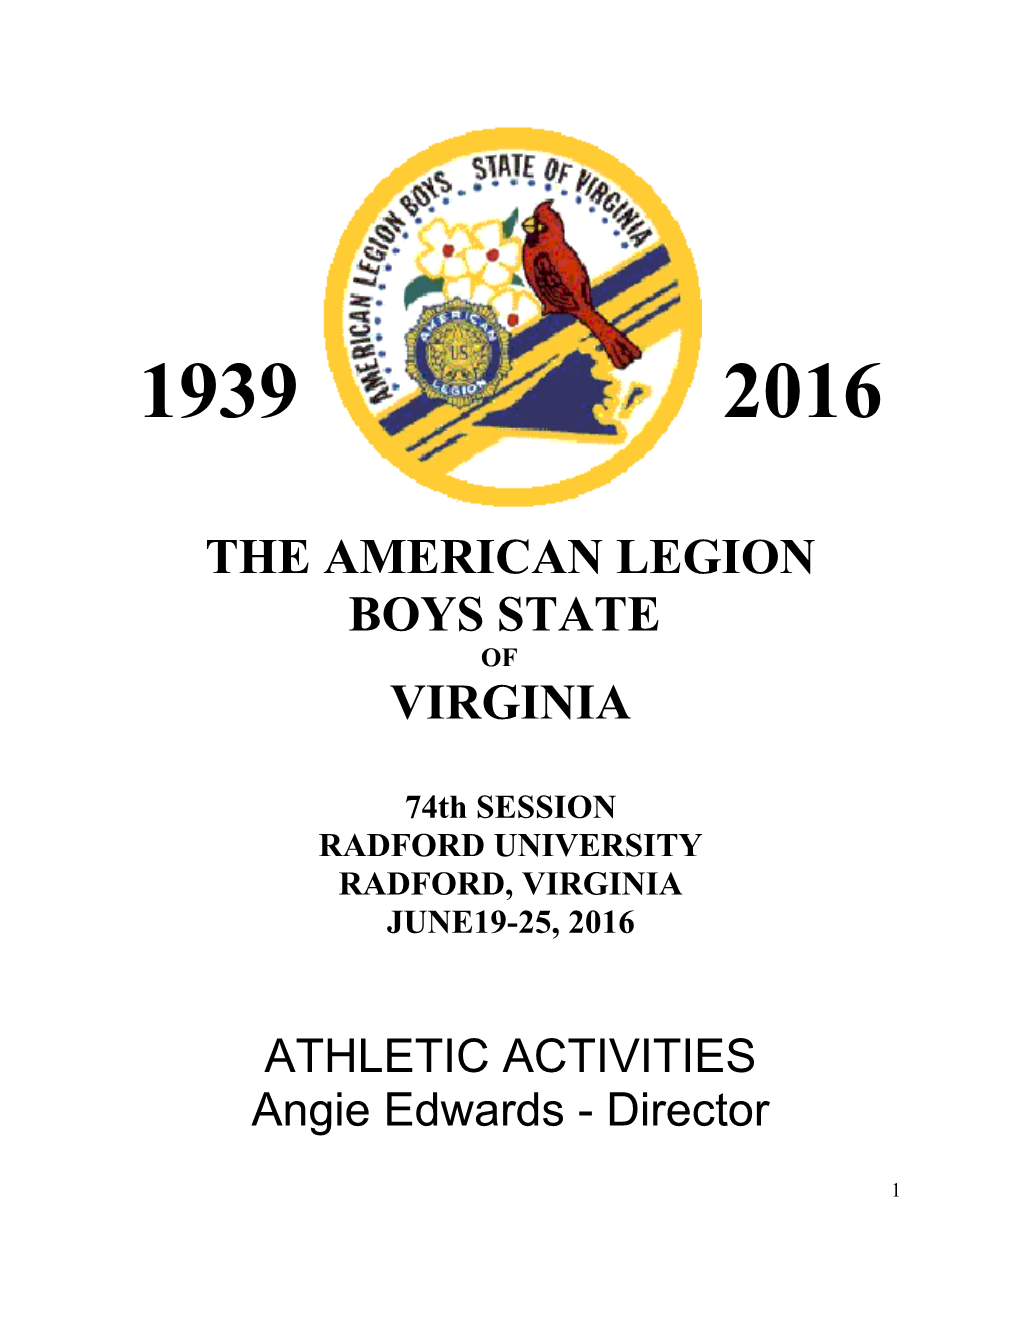 Virginia Boys State Sports Program